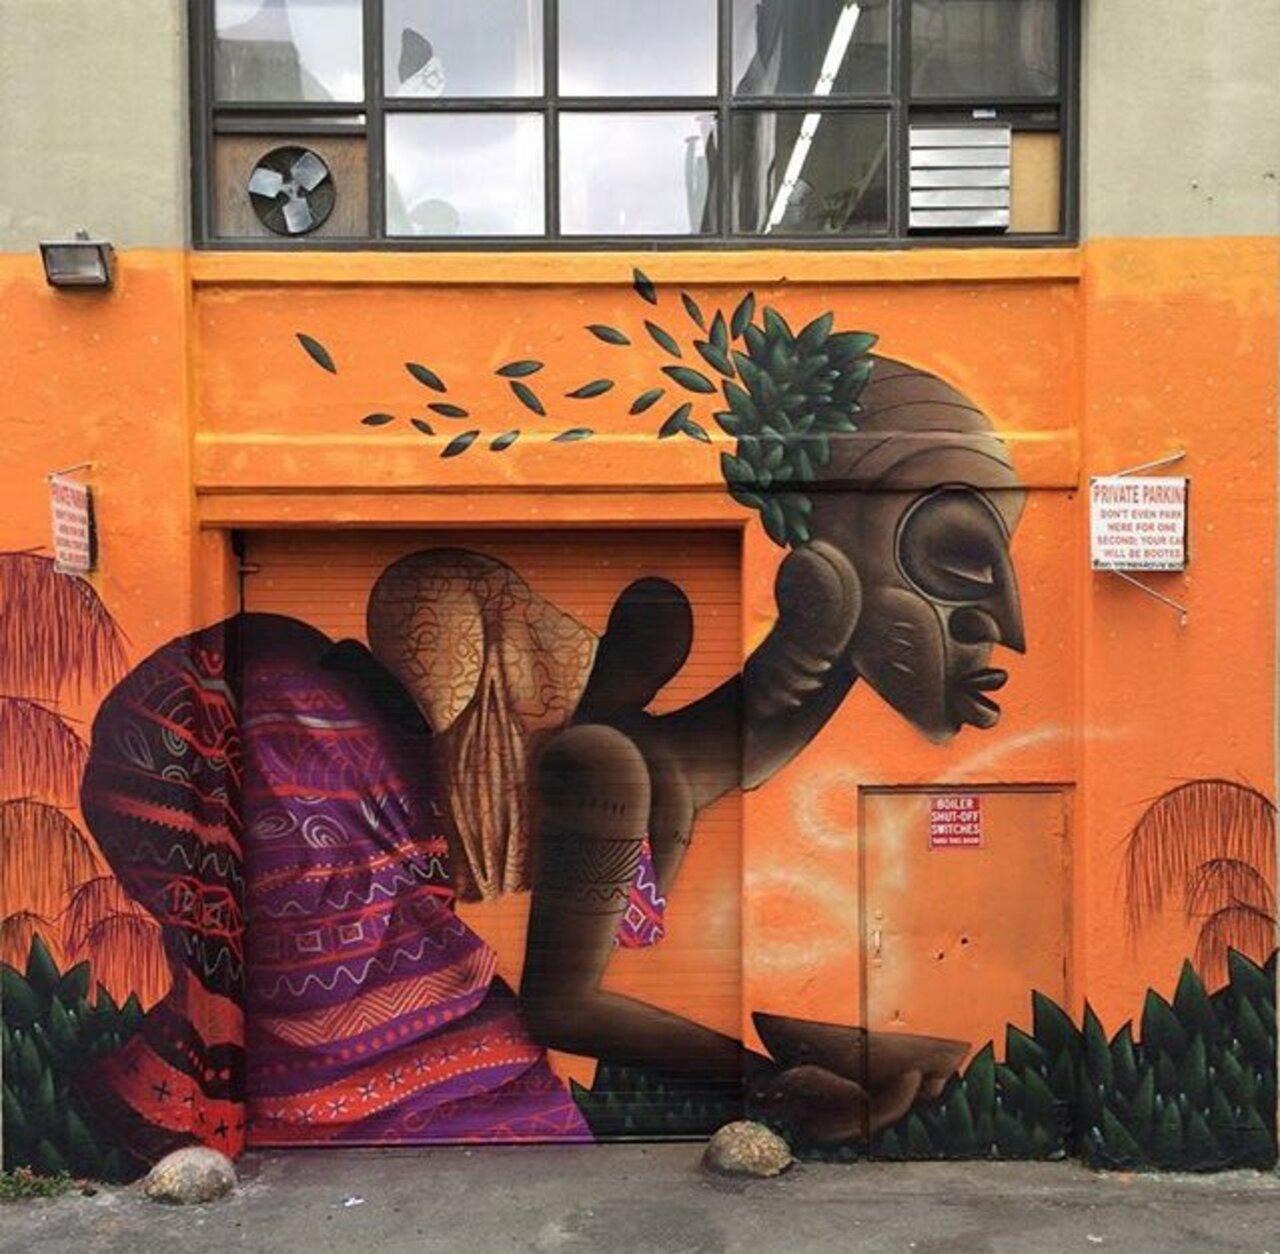 New Street Art by Alexandre Keto in NYC 

#art #graffiti #mural #streetart https://t.co/gSCinQCv0o